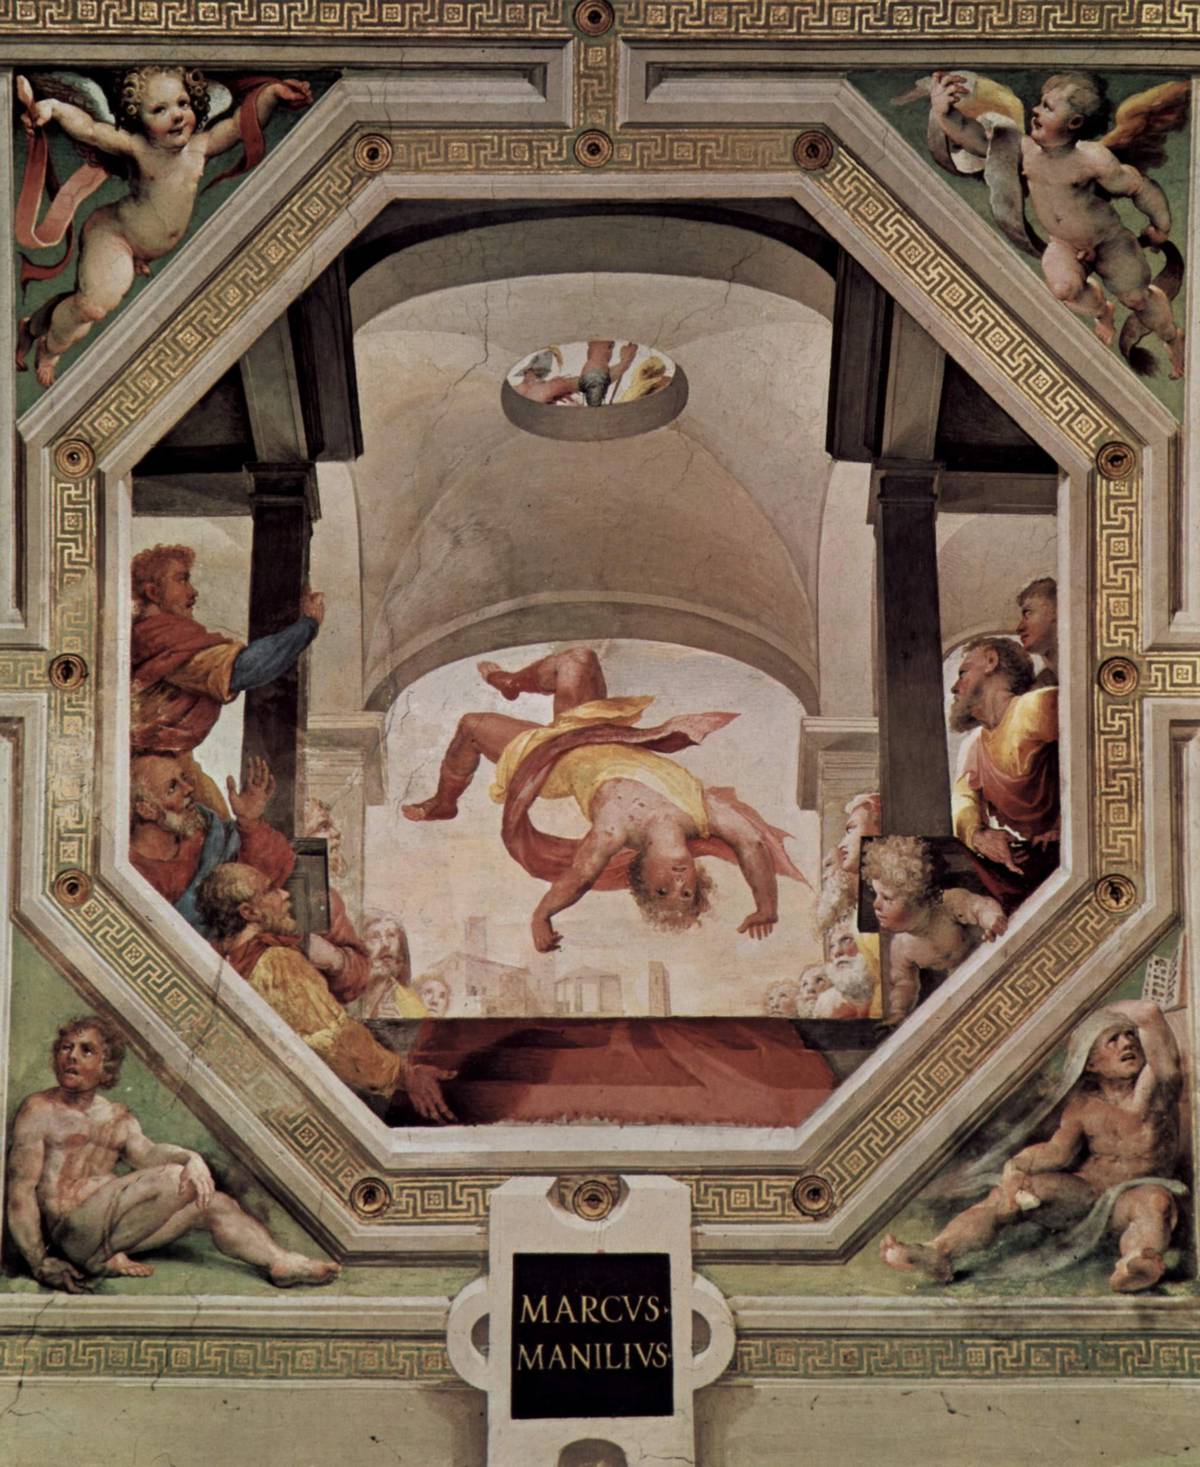 Manlius Capitolinus tossed from the Tarpeian Rock by Domenico di Pace Beccafumi, in Palazzo Pubblico of Siena